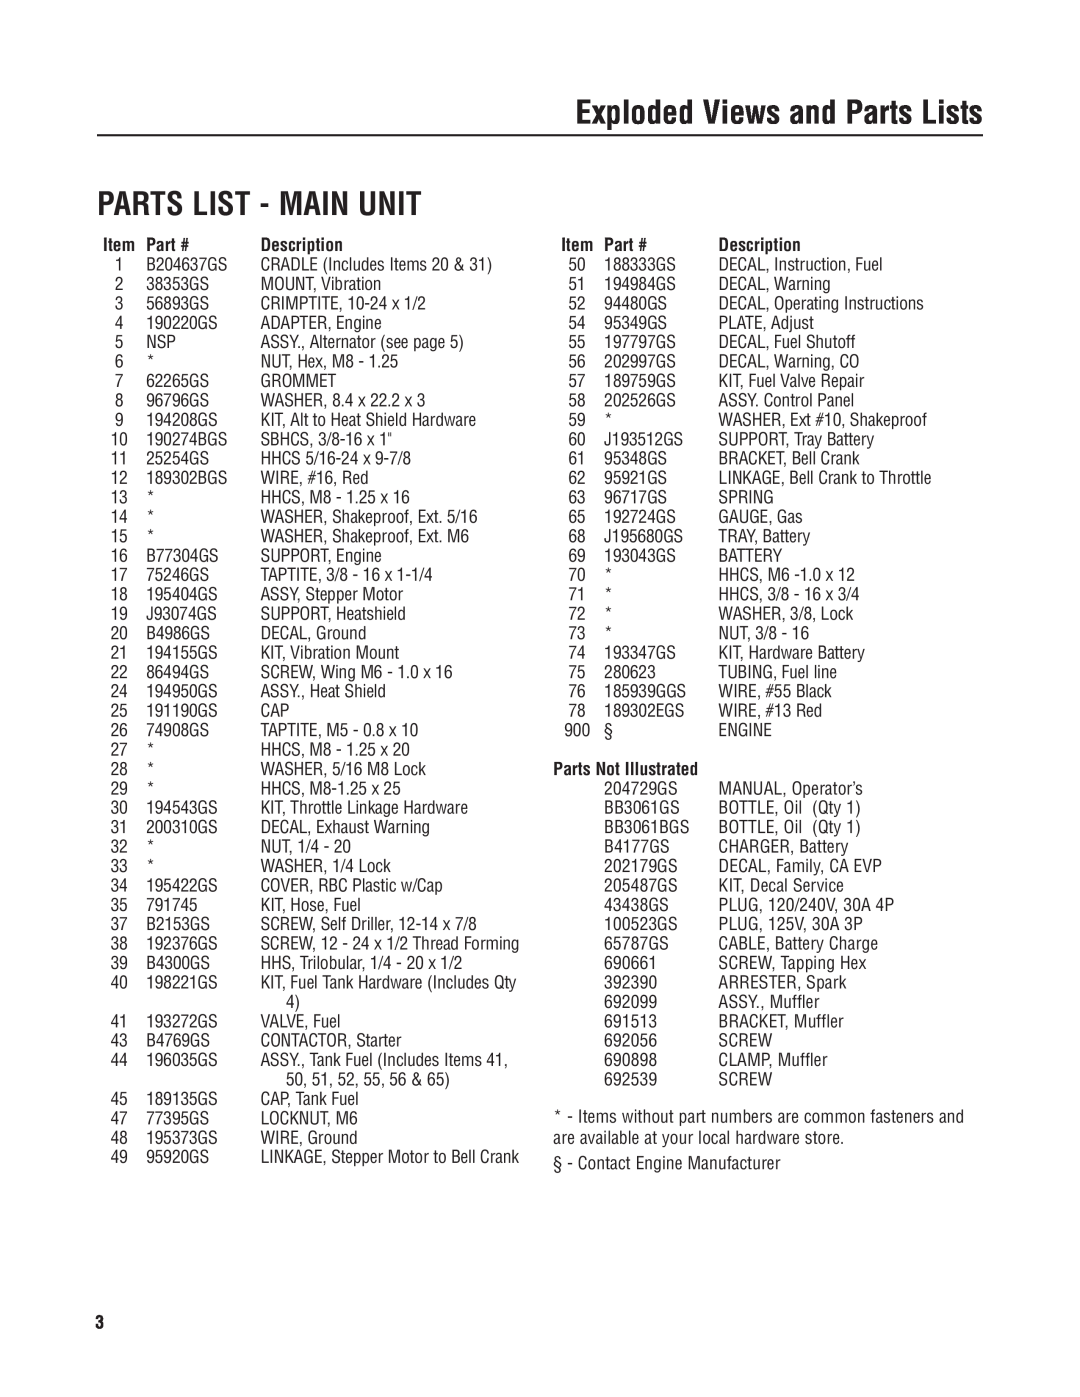 Briggs & Stratton 30382 Parts List - Main Unit, Description, Parts Not Illustrated, Exploded Views and Parts Lists, Part # 